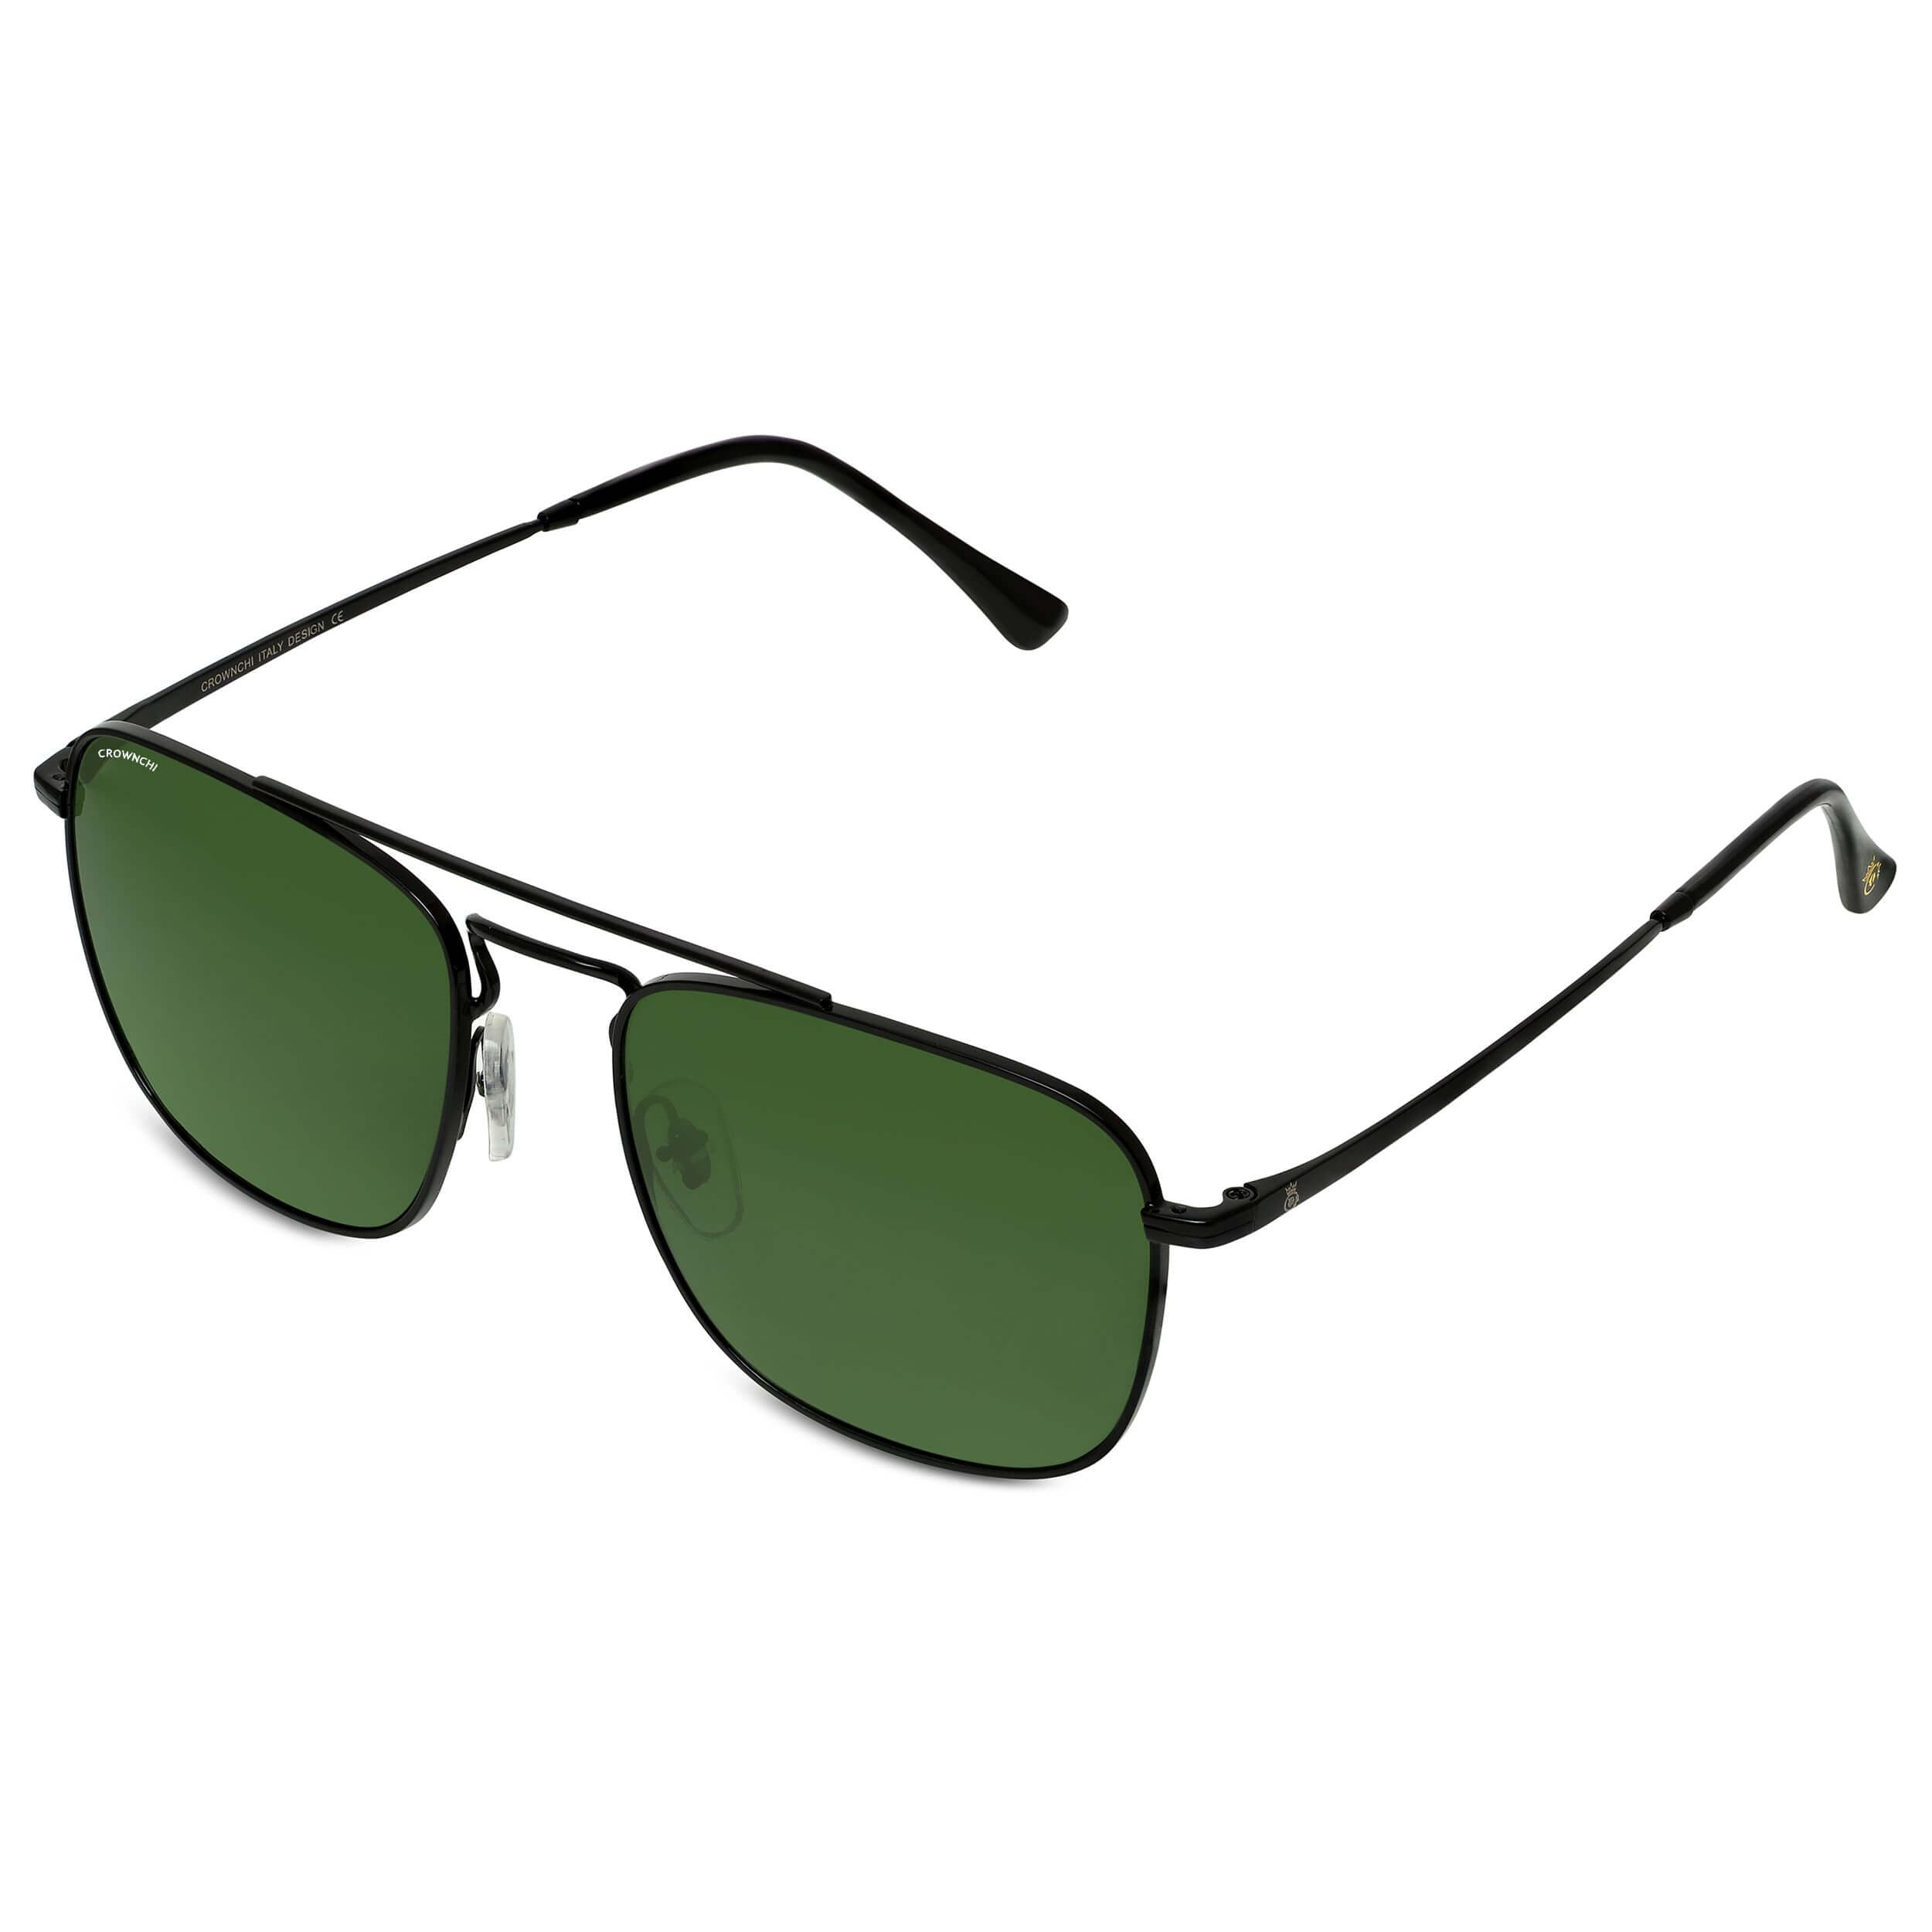 Denver Black Green Square Edition Sunglasses